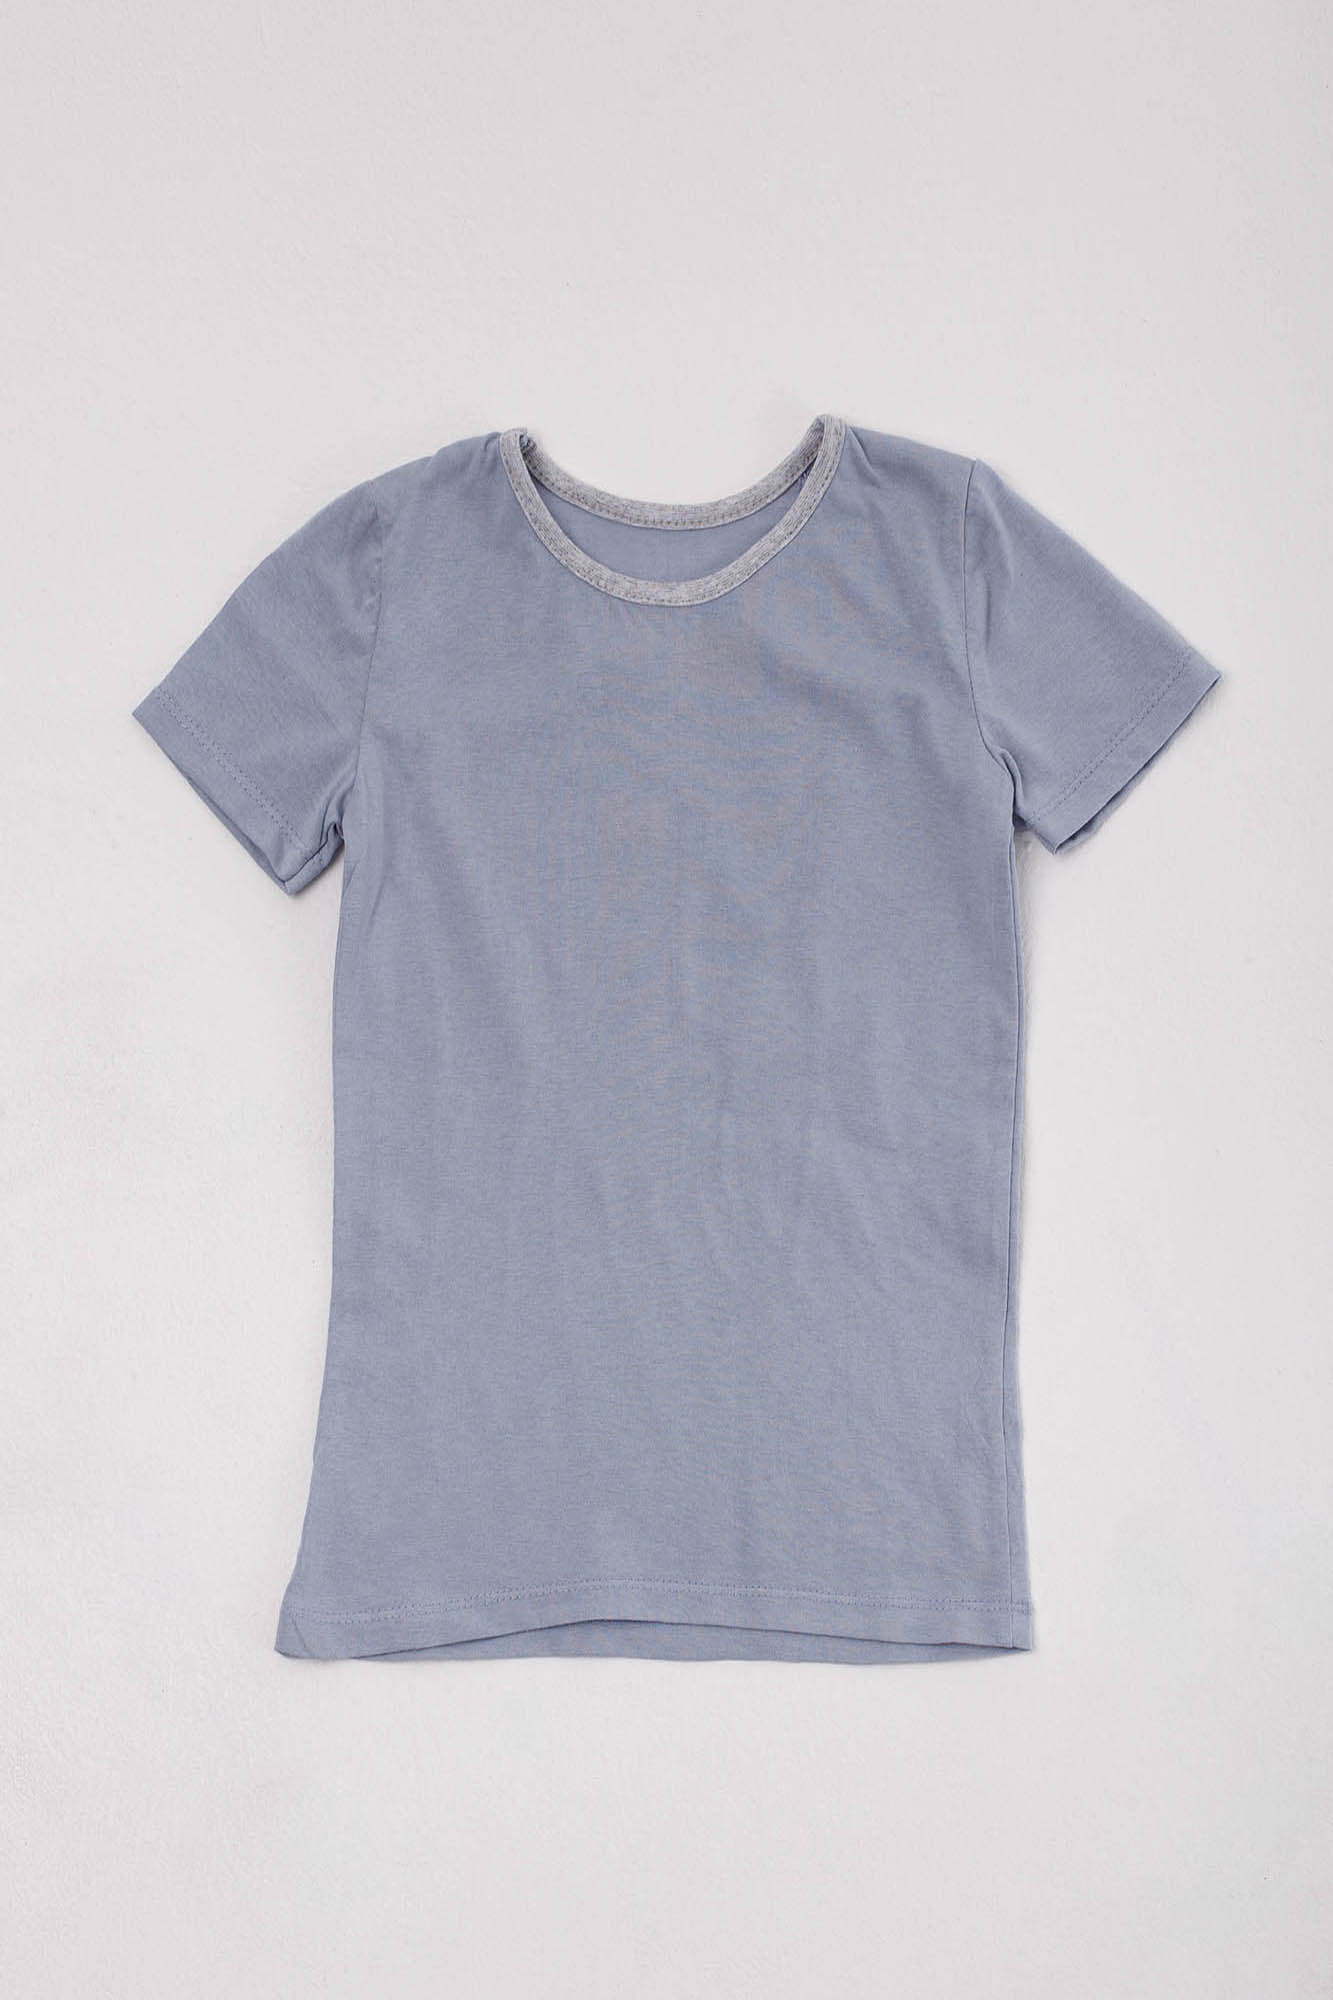 Детская футболка Aislin Цвет: Серый (9-10 лет), размер 9-10 лет zar680338 Детская футболка Aislin Цвет: Серый (9-10 лет) - фото 1